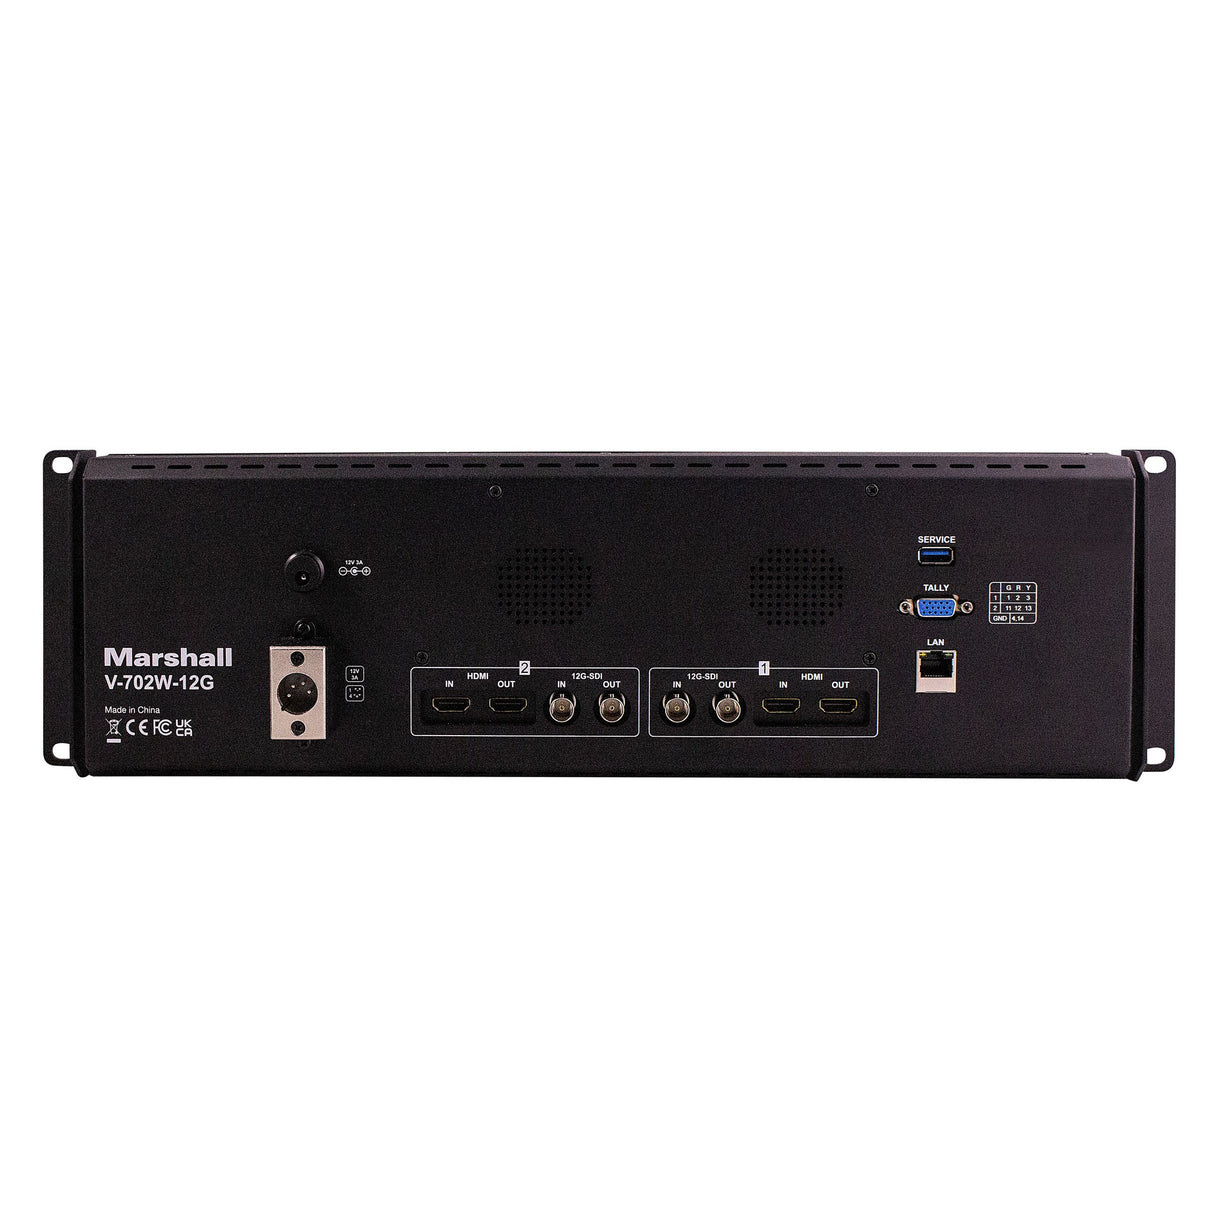 Marshall V-702W-12G 12G-SDI/HDMI Dual 7-Inch Rackmount Monitor